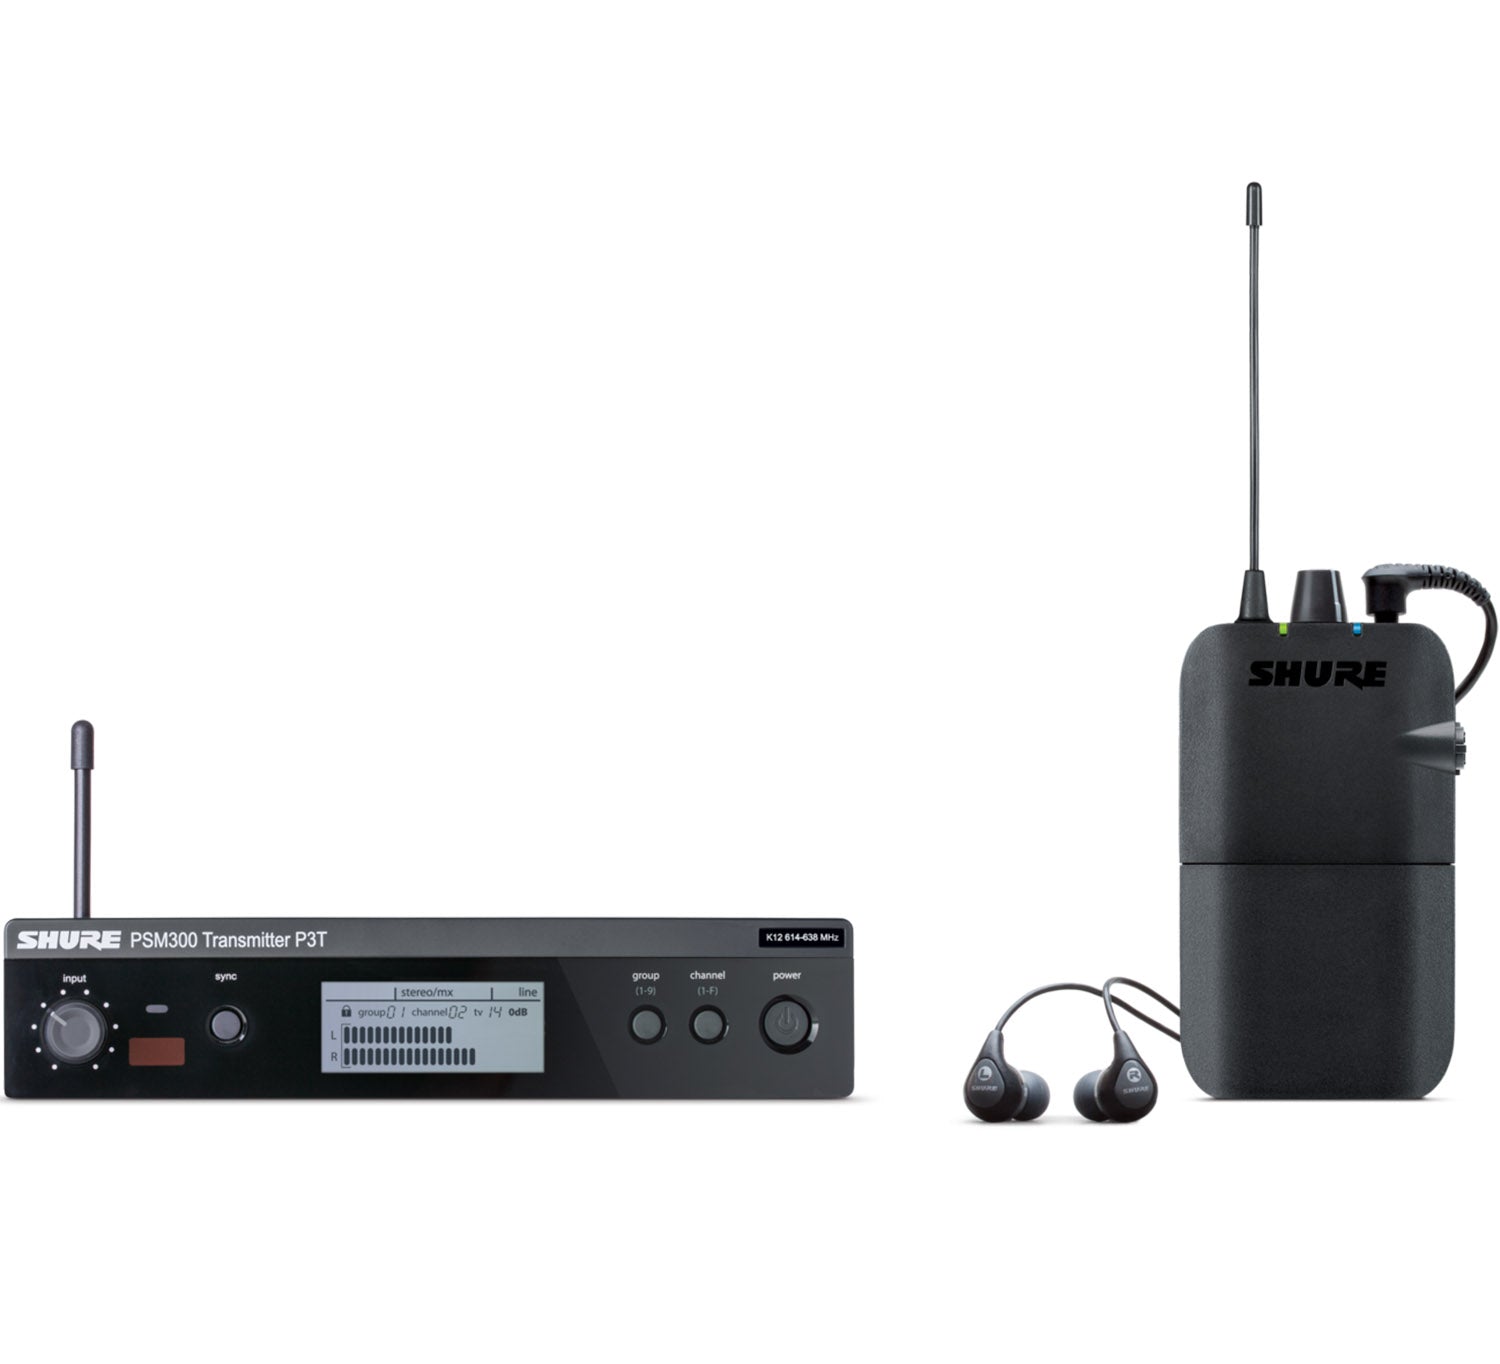 Shure P3TR112GR PSM 300 Wireless In-Ear Monitoring Set with SE112 Earphones